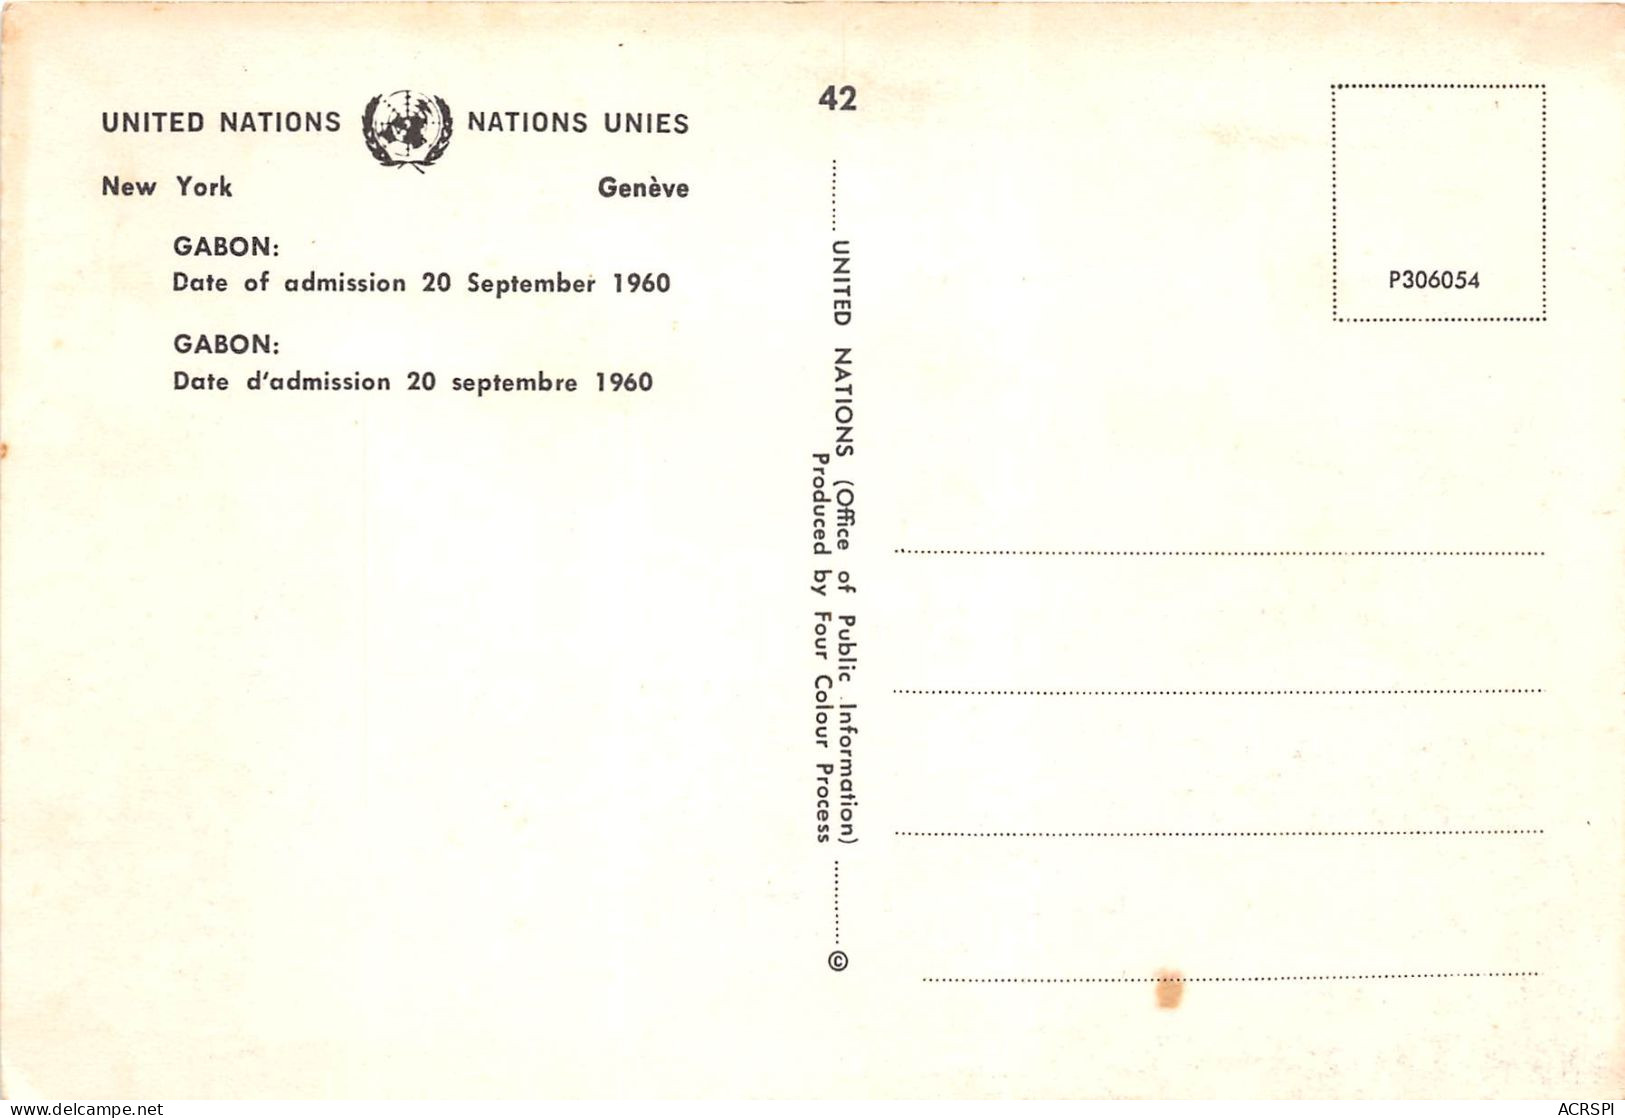 GABON United Nations 1960 Carte 3 New York  Nations Unies  (scan Recto-verso) OO 0961 - Gabón